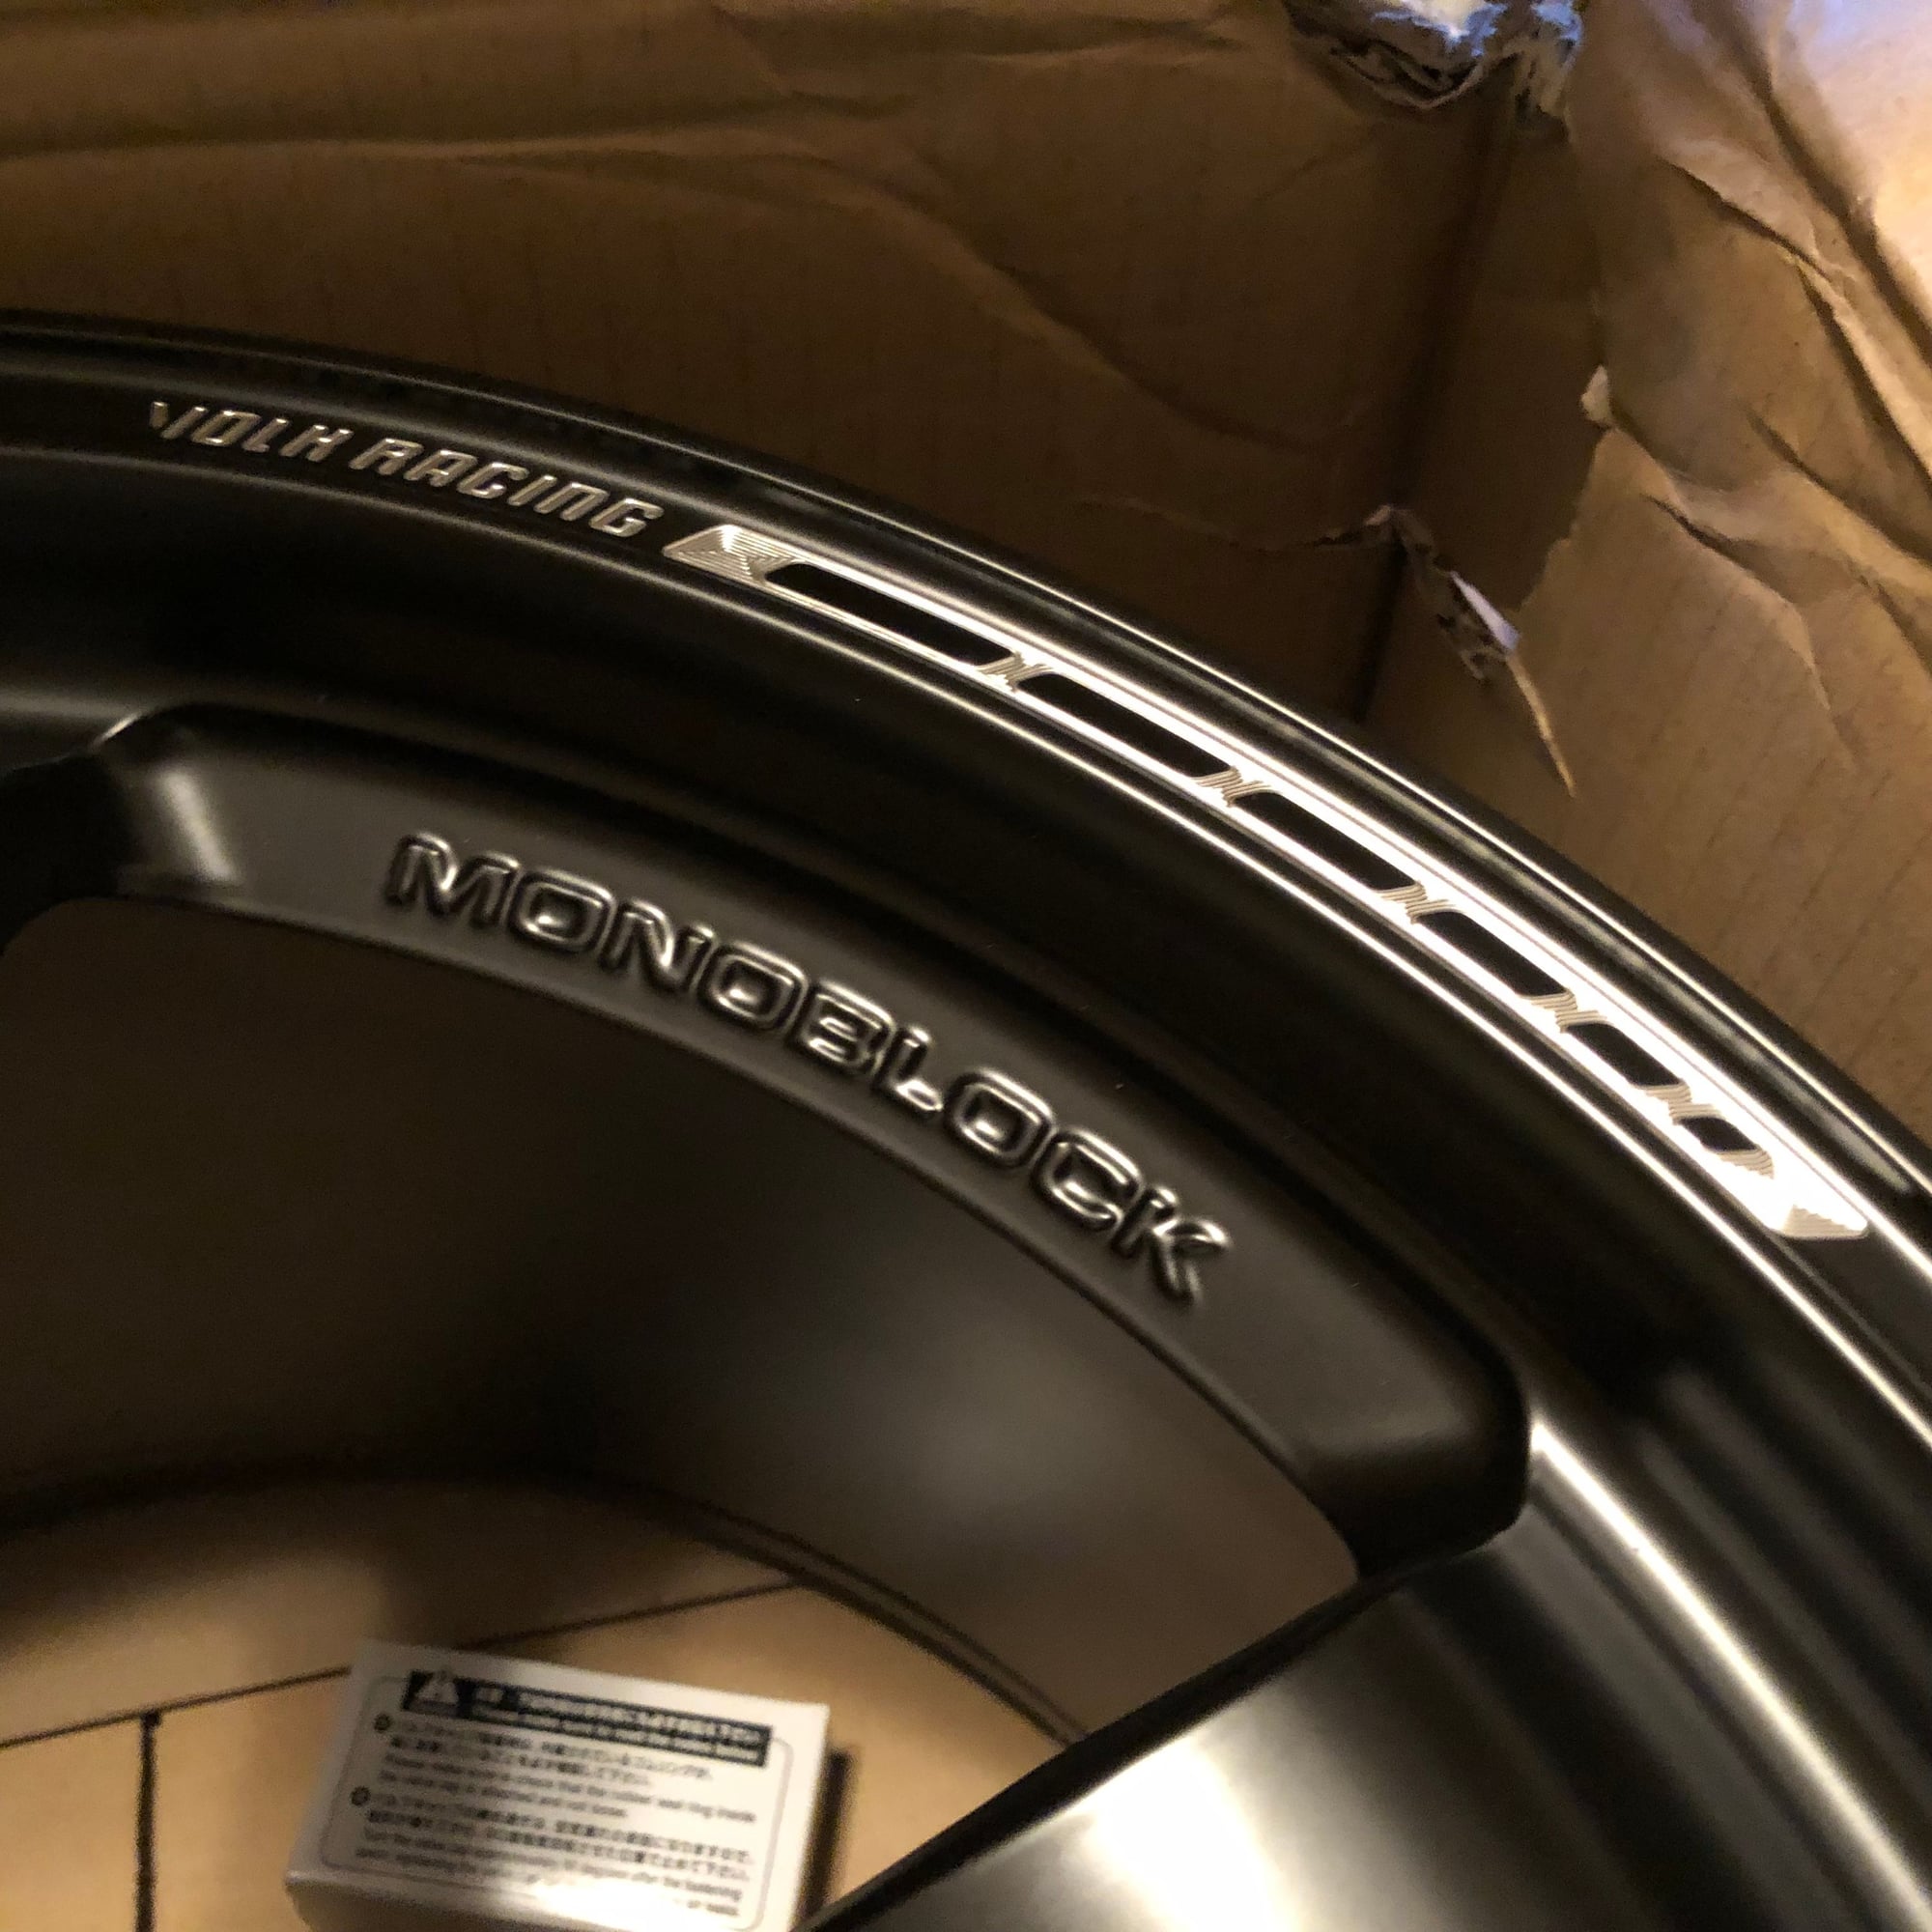 Wheels and Tires/Axles - Work and Volk Wheels 18x10.5 / 18x11 - New - 2008 to 2015 Mitsubishi Lancer Evolution - Scottsdale, AZ 85251, United States